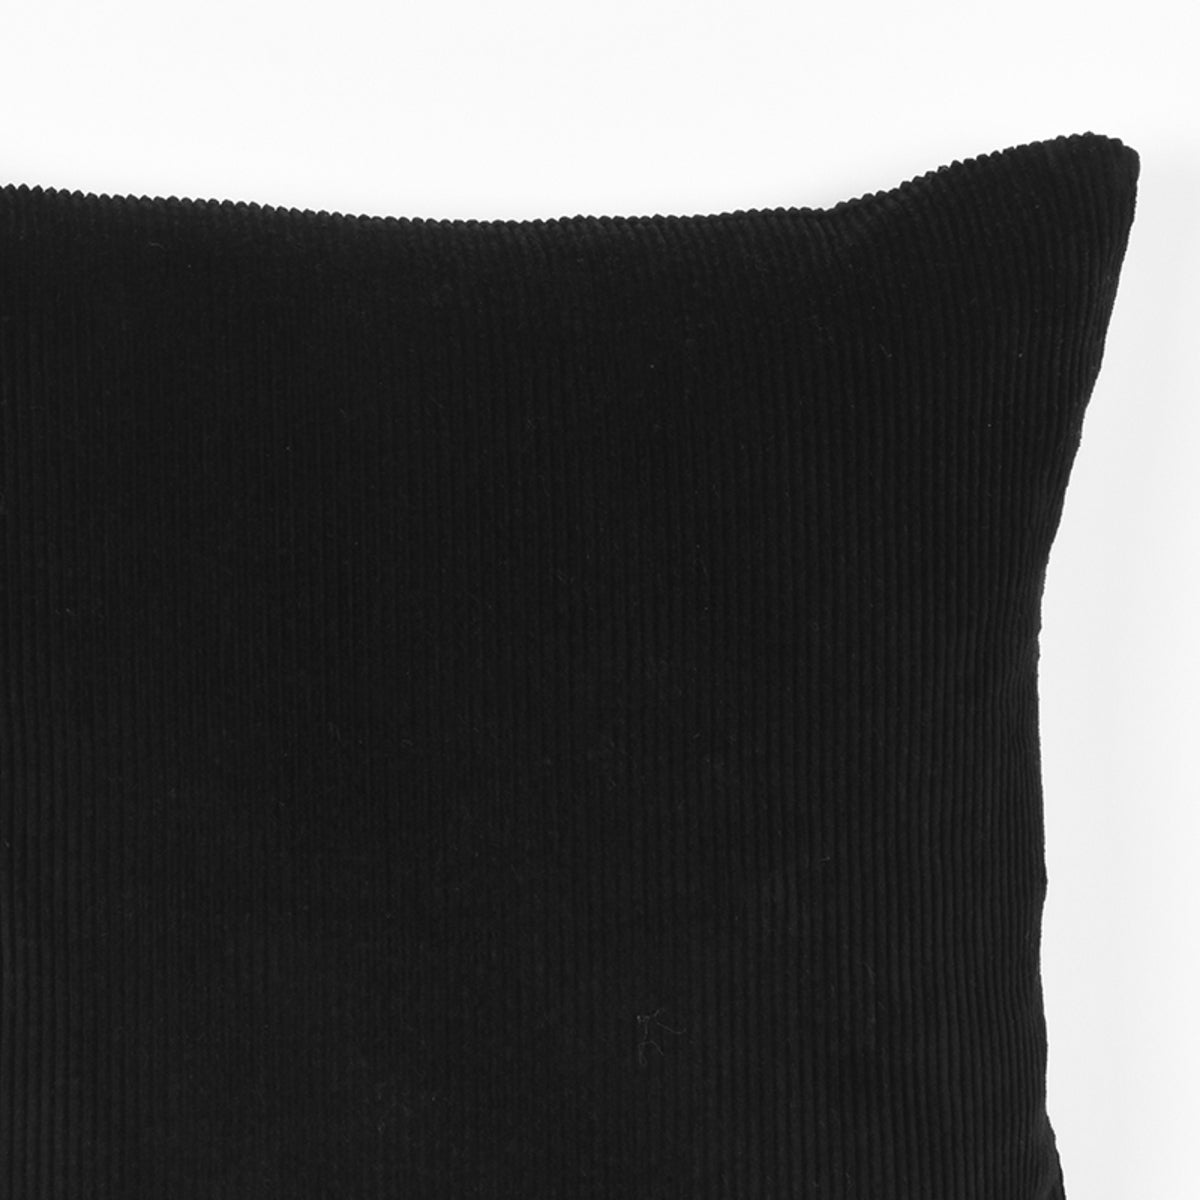 LABEL51 Decorative cushion Rib - Black - Cotton